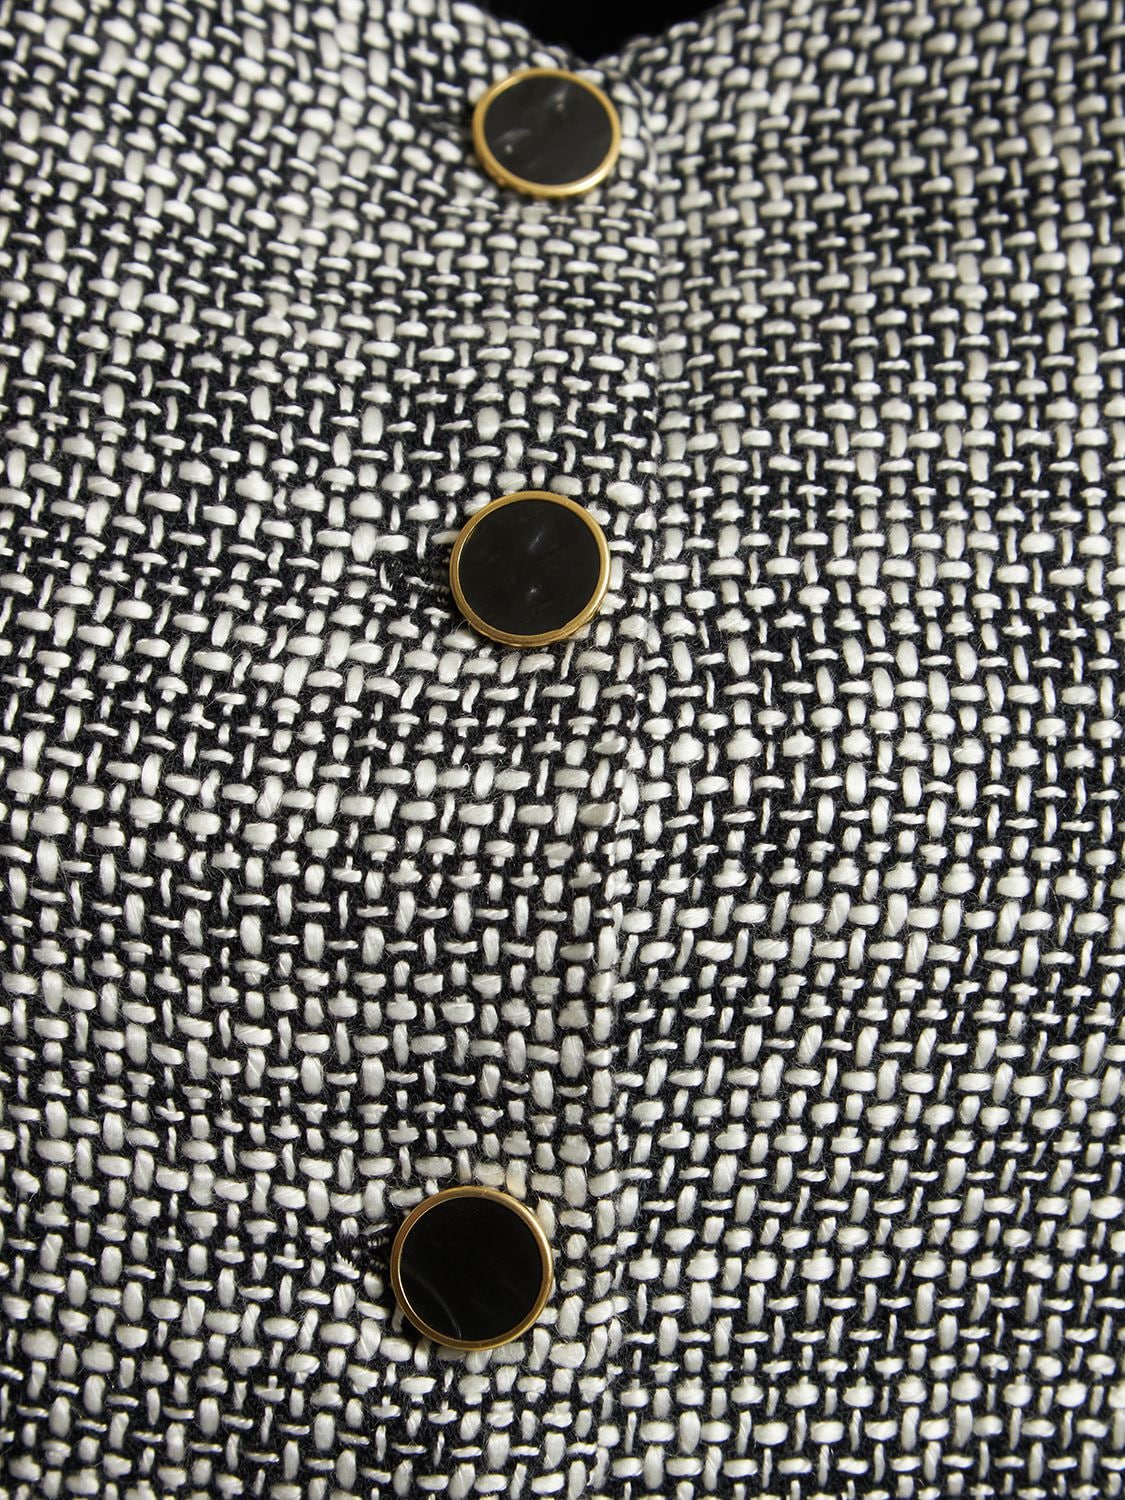 Shop Reformation Olivette Tweed Mini Dress In Black,white